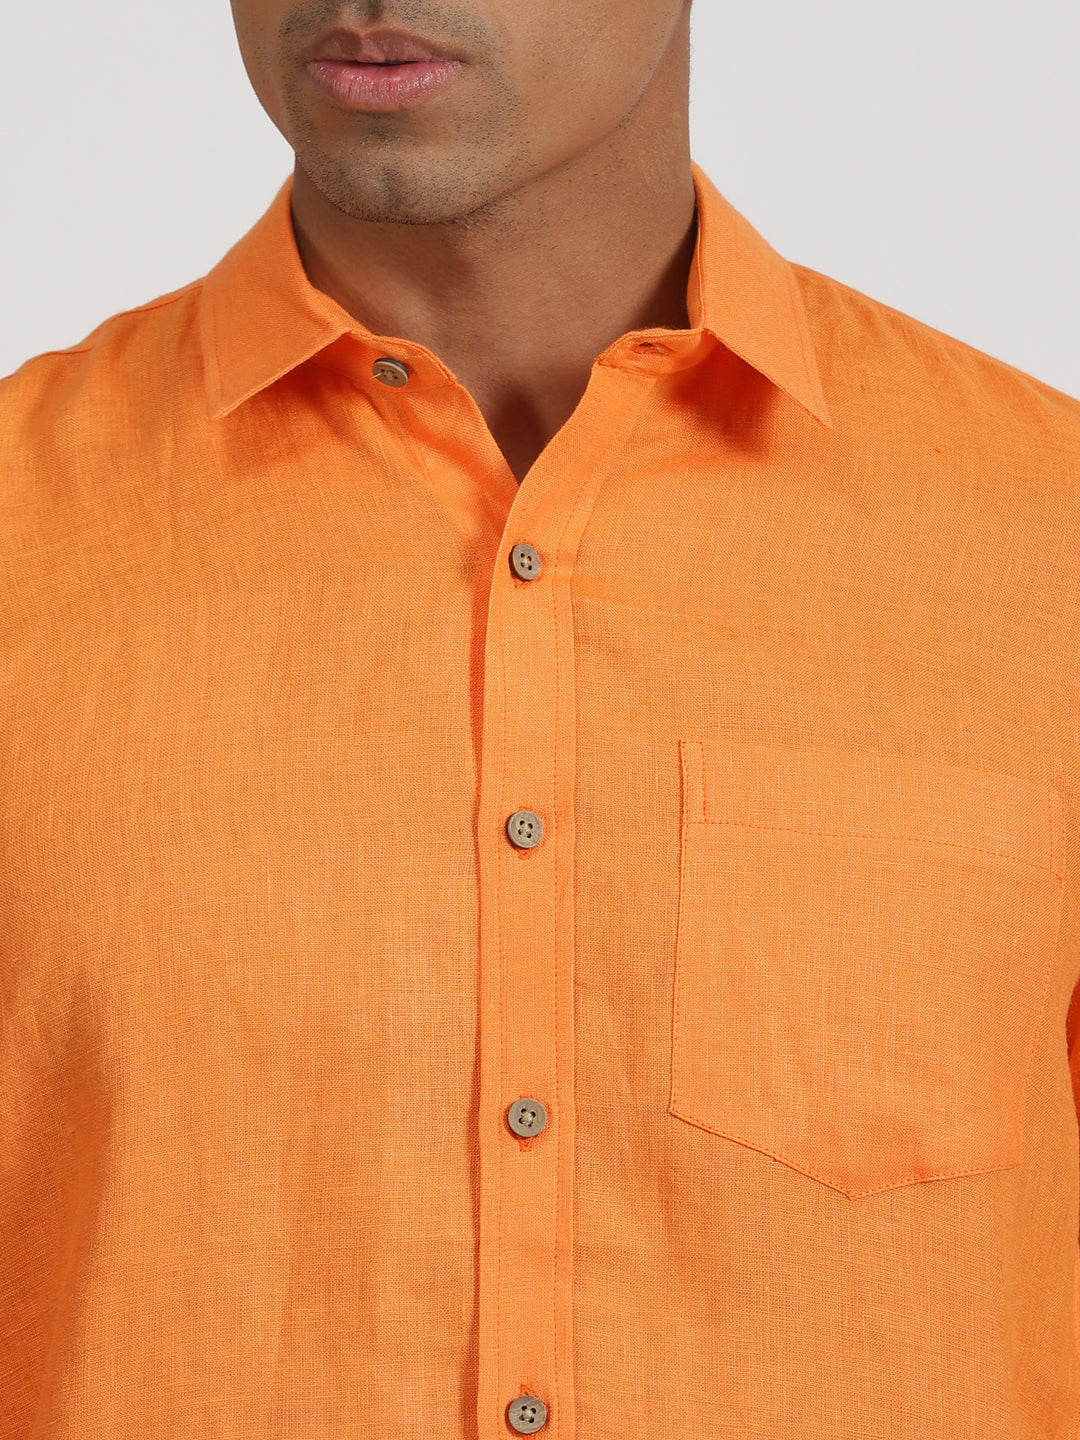 Harvey - Men's Pure Linen Full Sleeve Shirt - Beer Orange